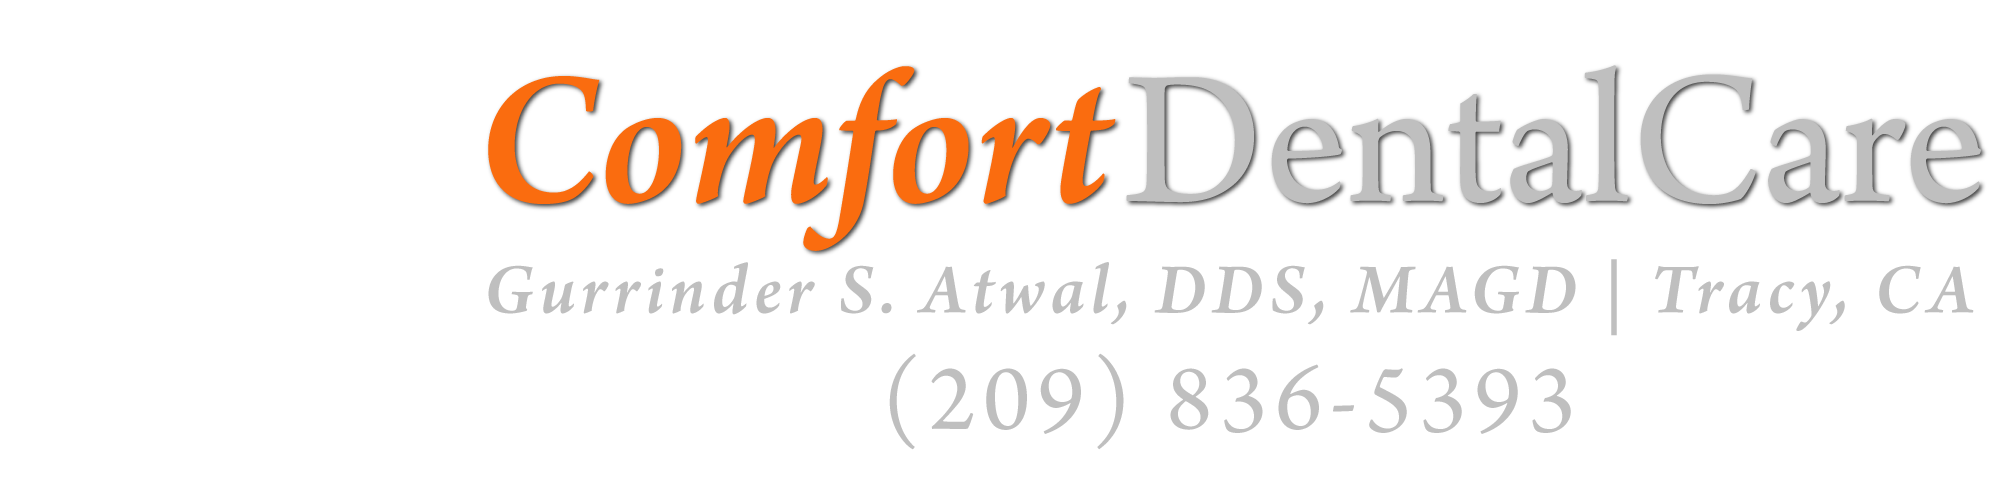 Comfort Dental Care Tracy CA Gurrinder Atwal Logo inverted